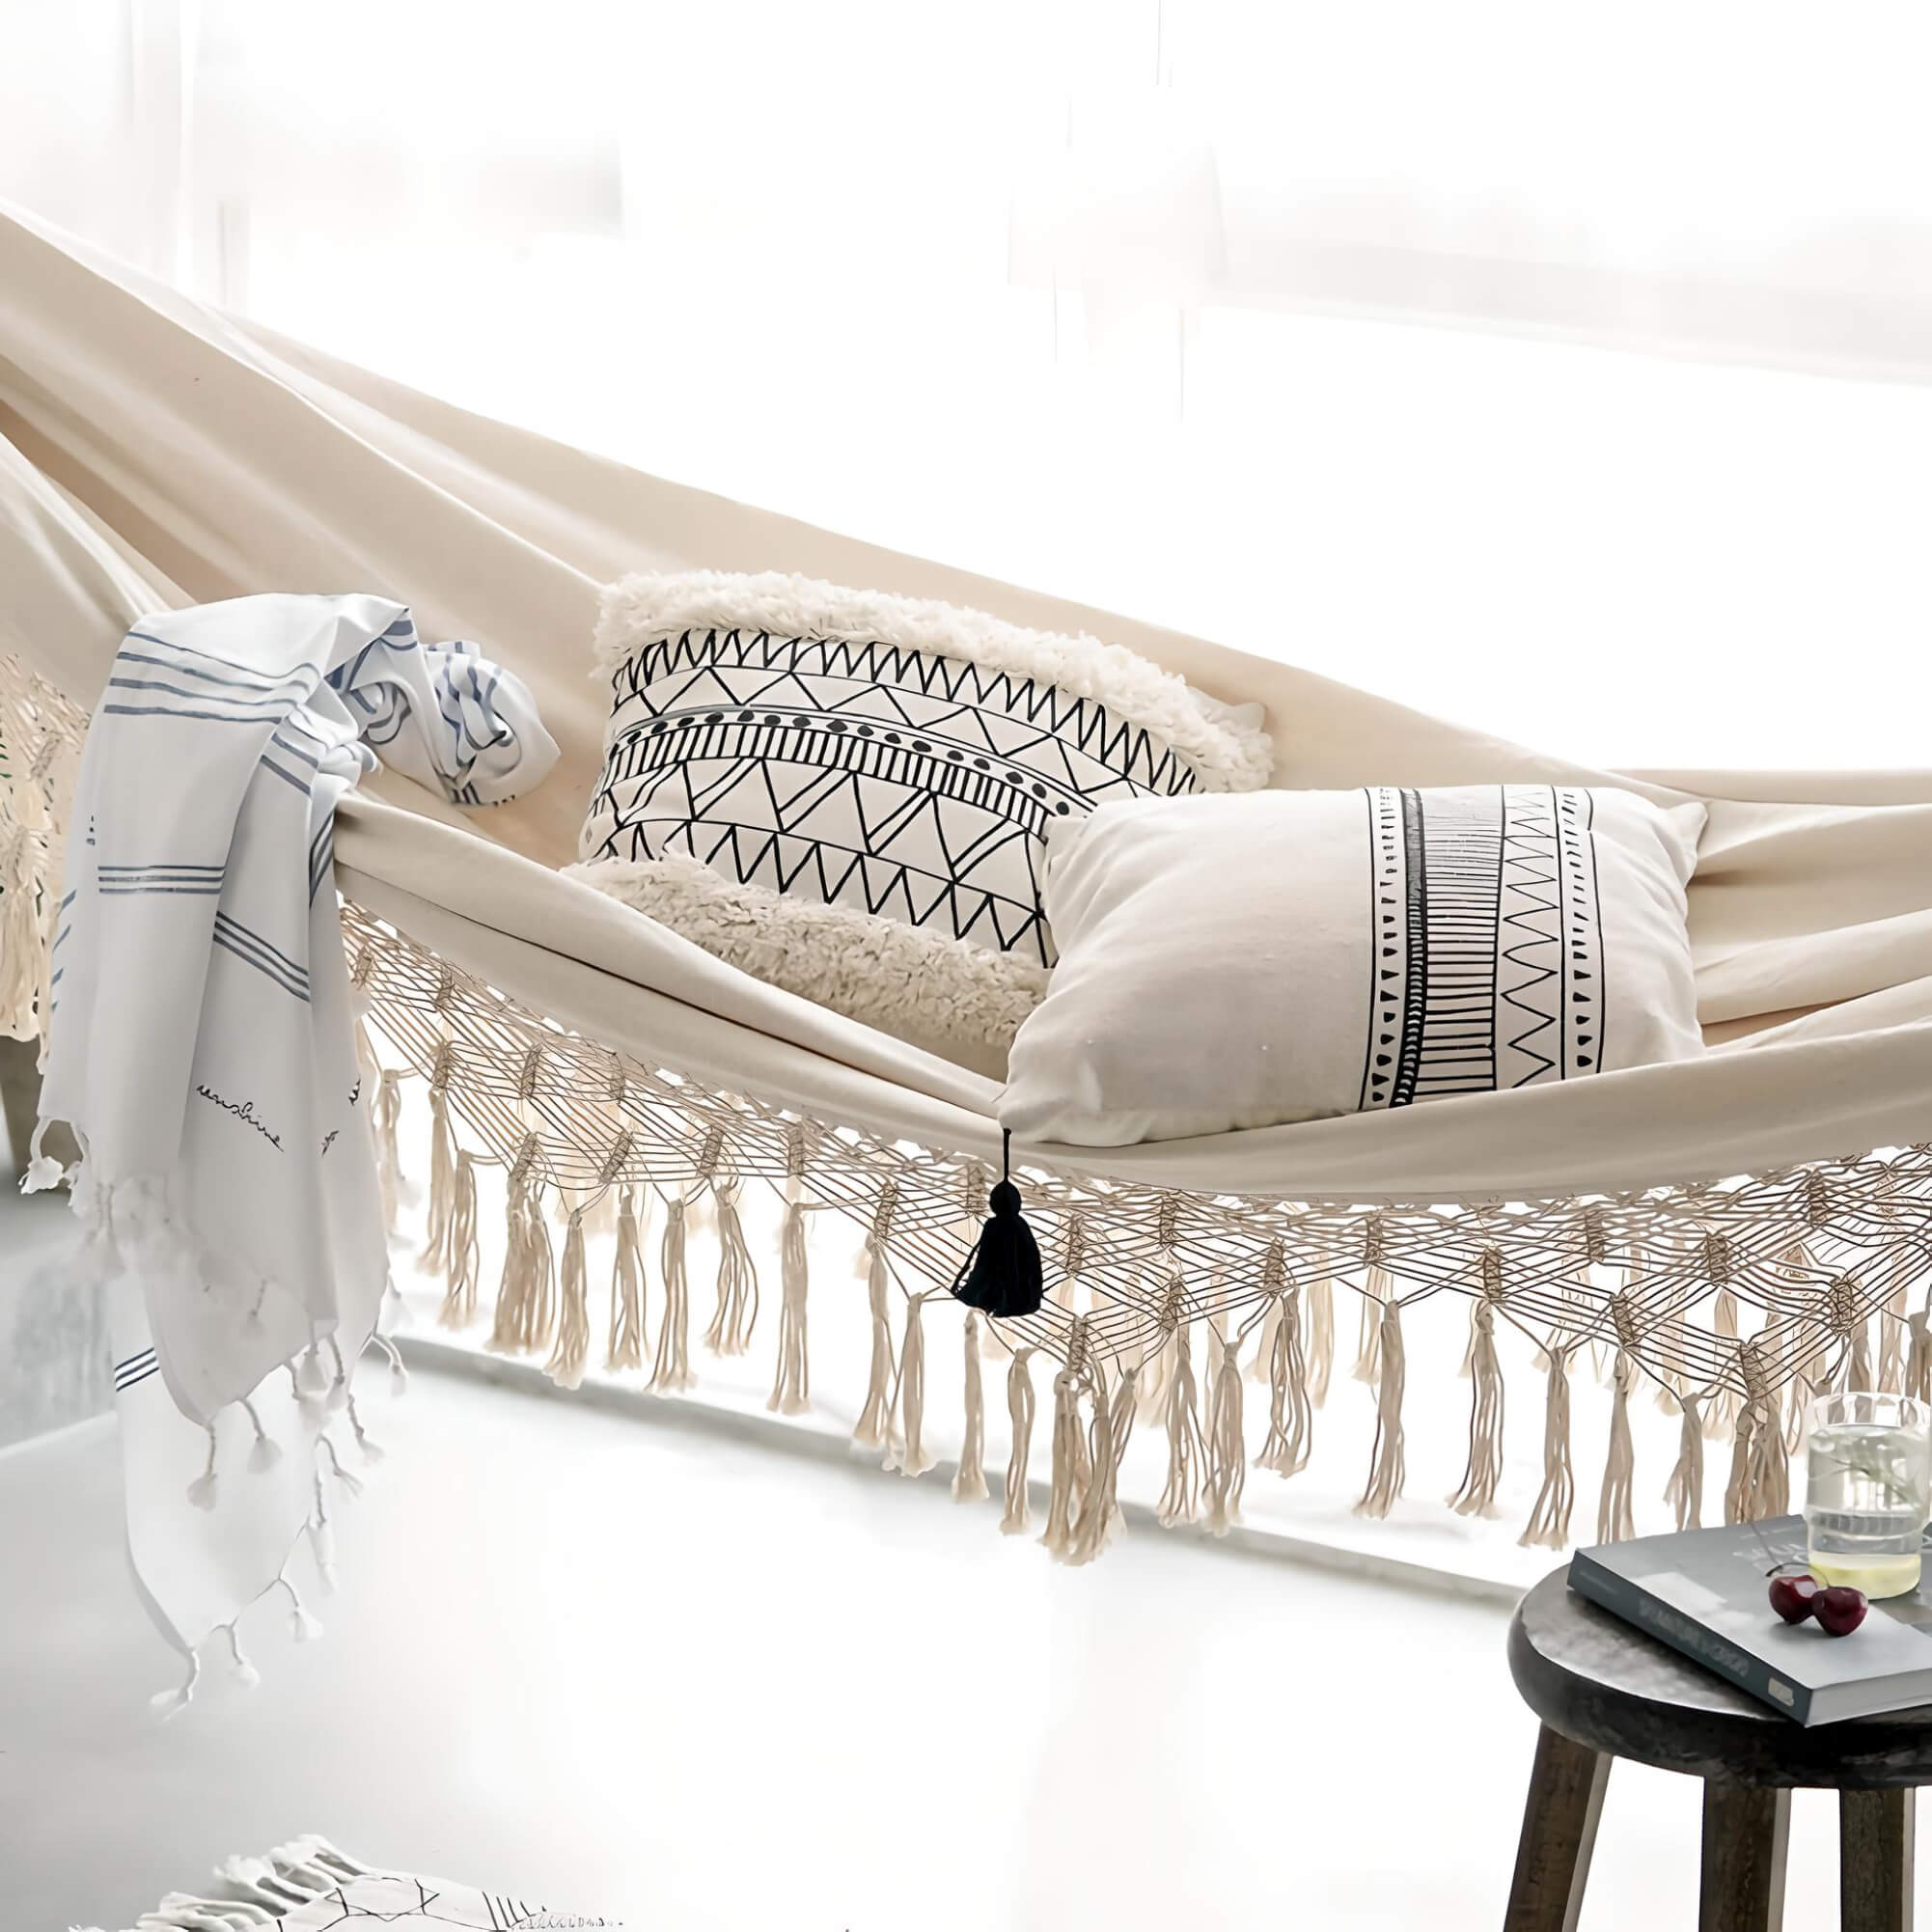 hammock-bed-indoor-hanged-in-a-room